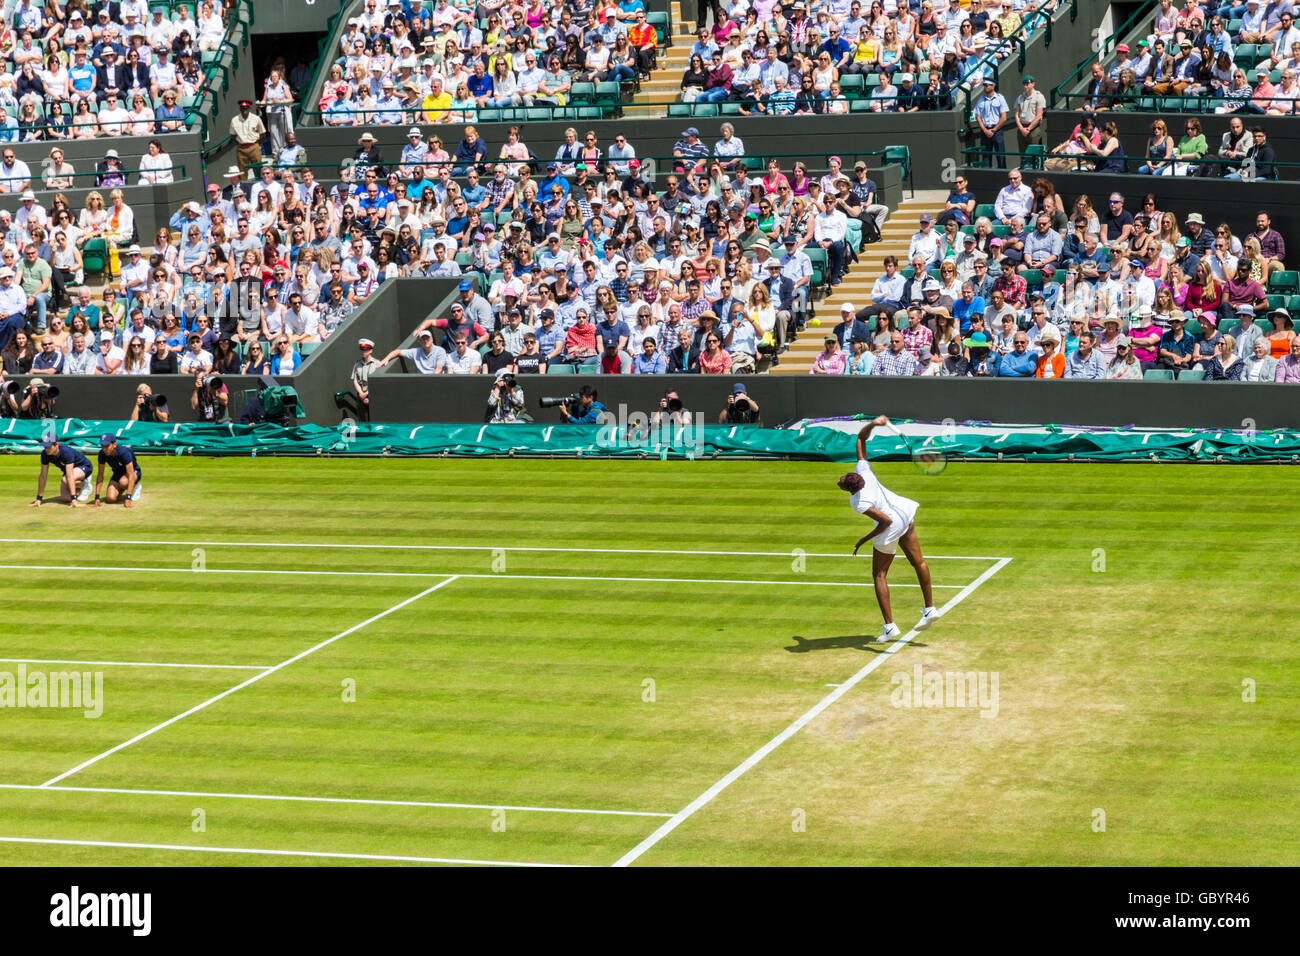 American tennis player Venus Williams serves on Centre Court, ladies singles quarter finals game, Wimbledon 2016 Championships Stock Photo